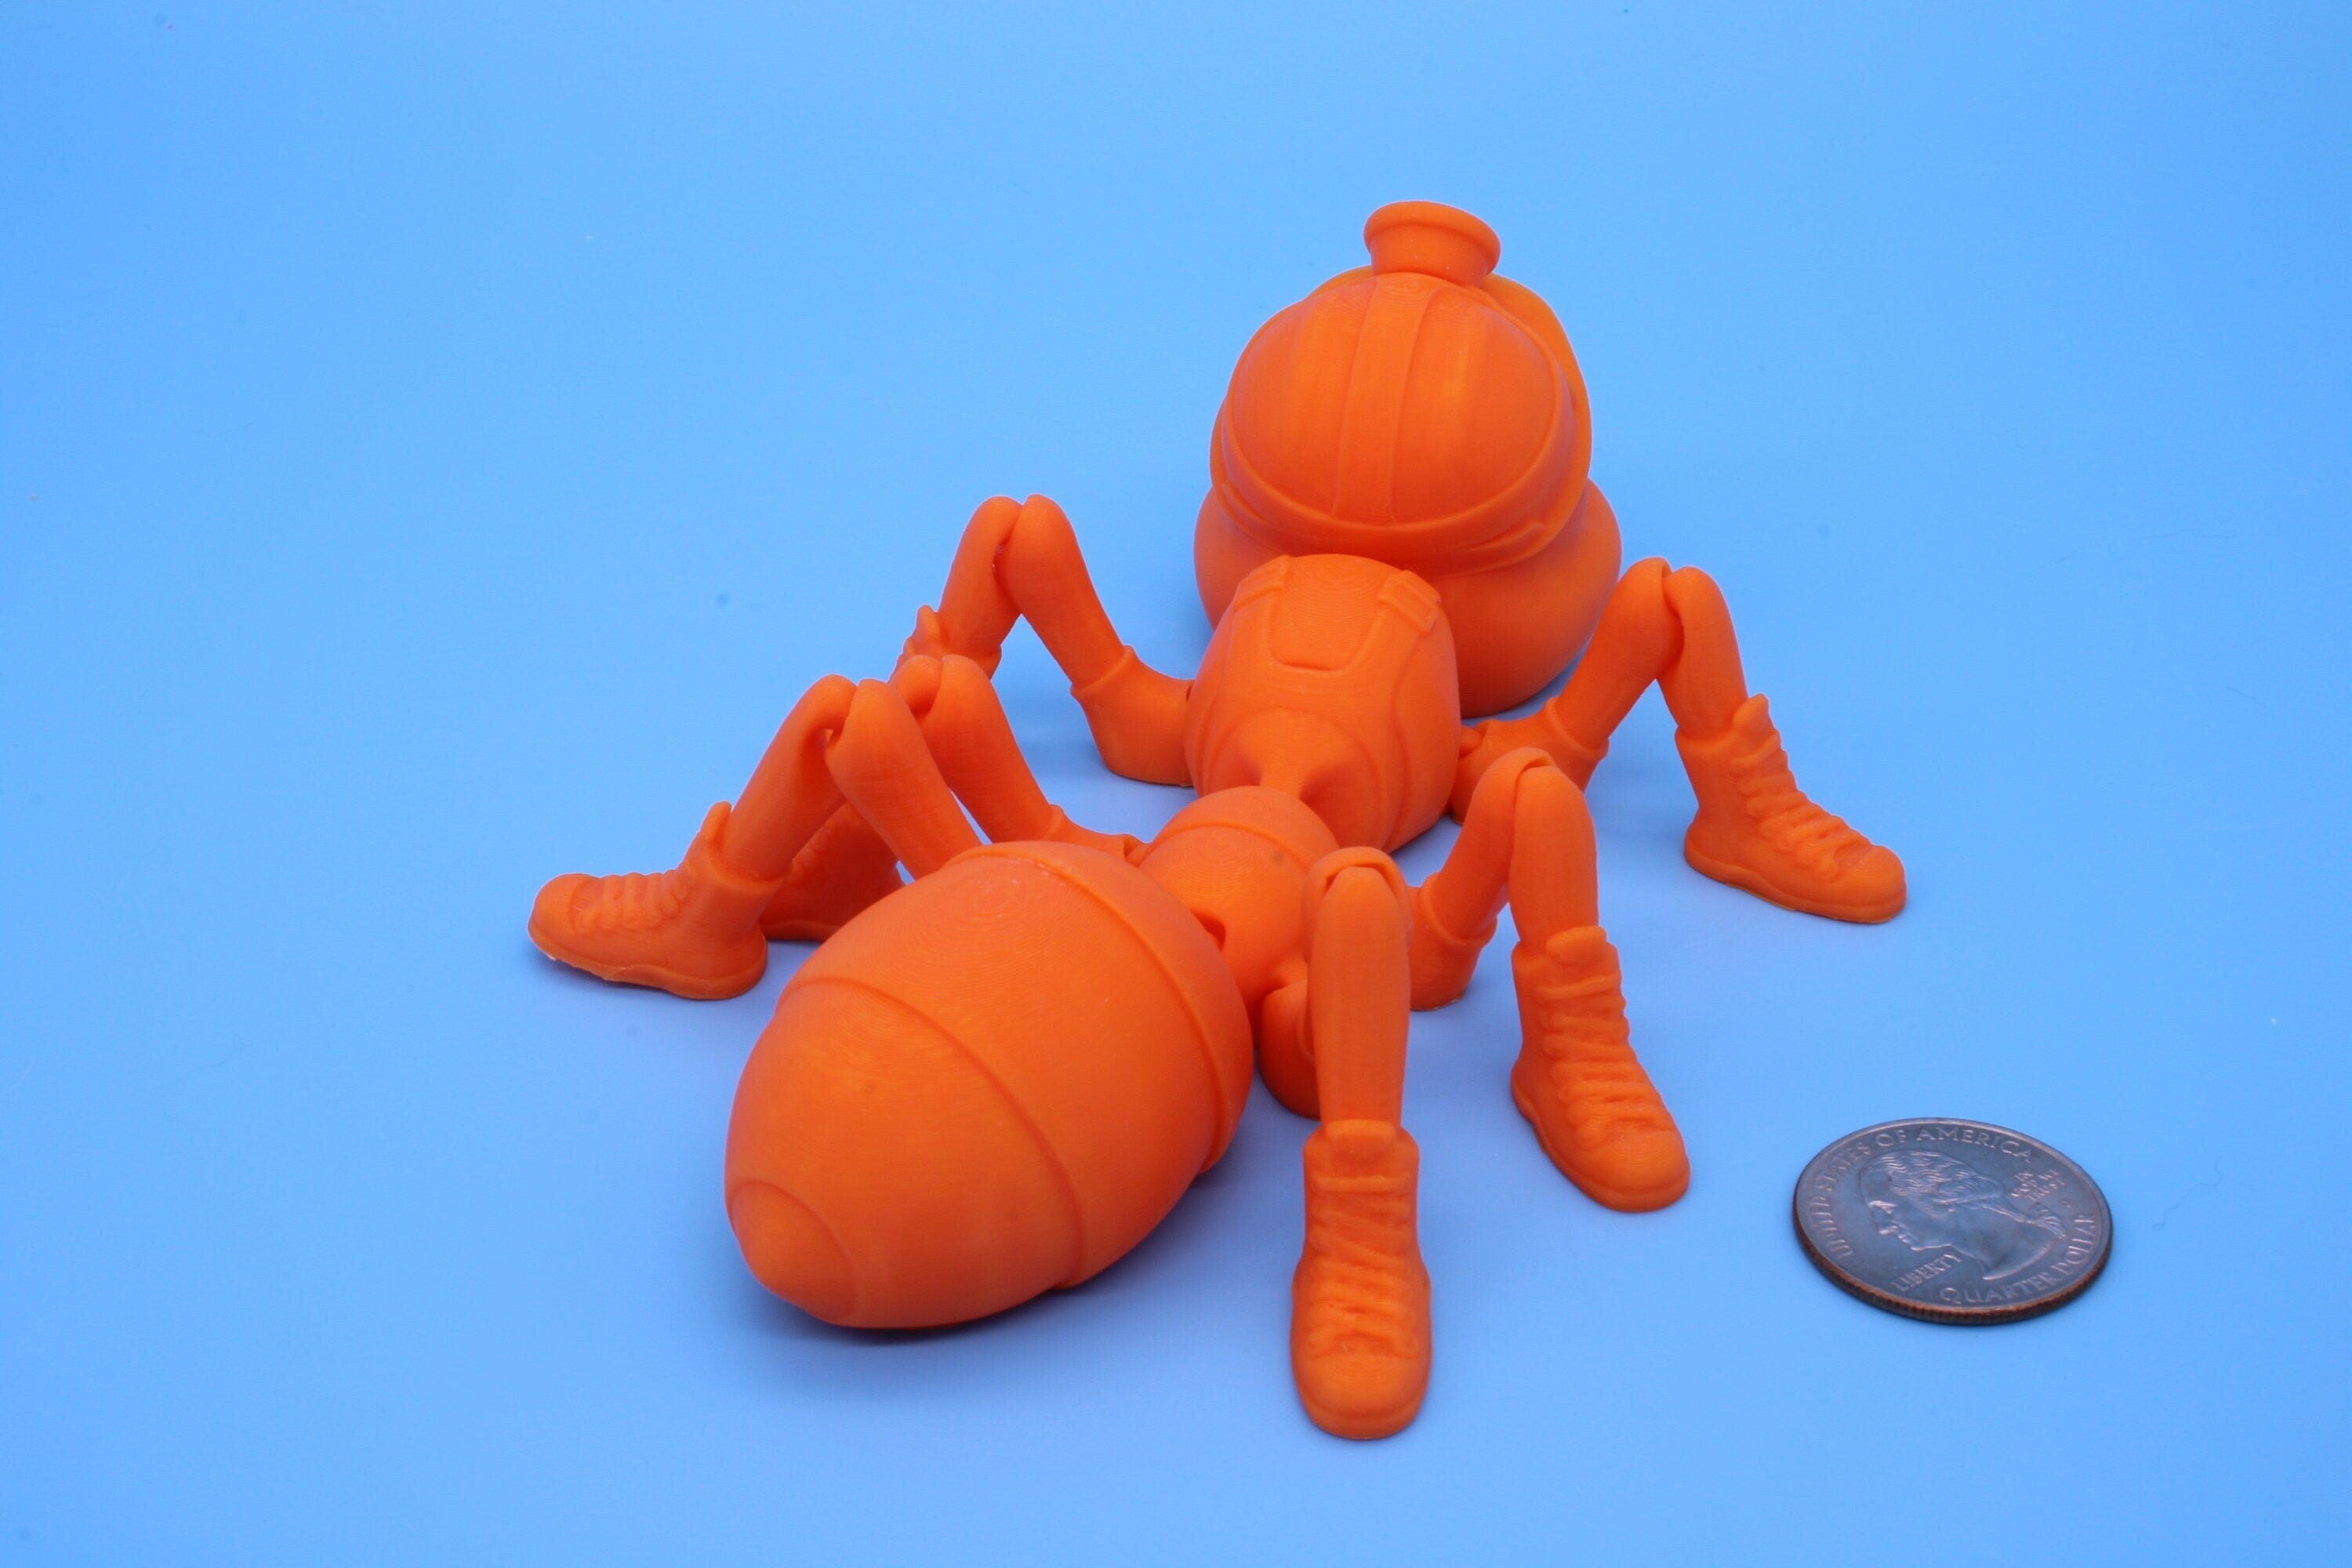 Flexi Coal Miner Ant | Articulating Orange | 3D Printed. | Super Cute | Friendly, Hardworking Ant | Great Fidget Toy | Buddy | Sensory toy.